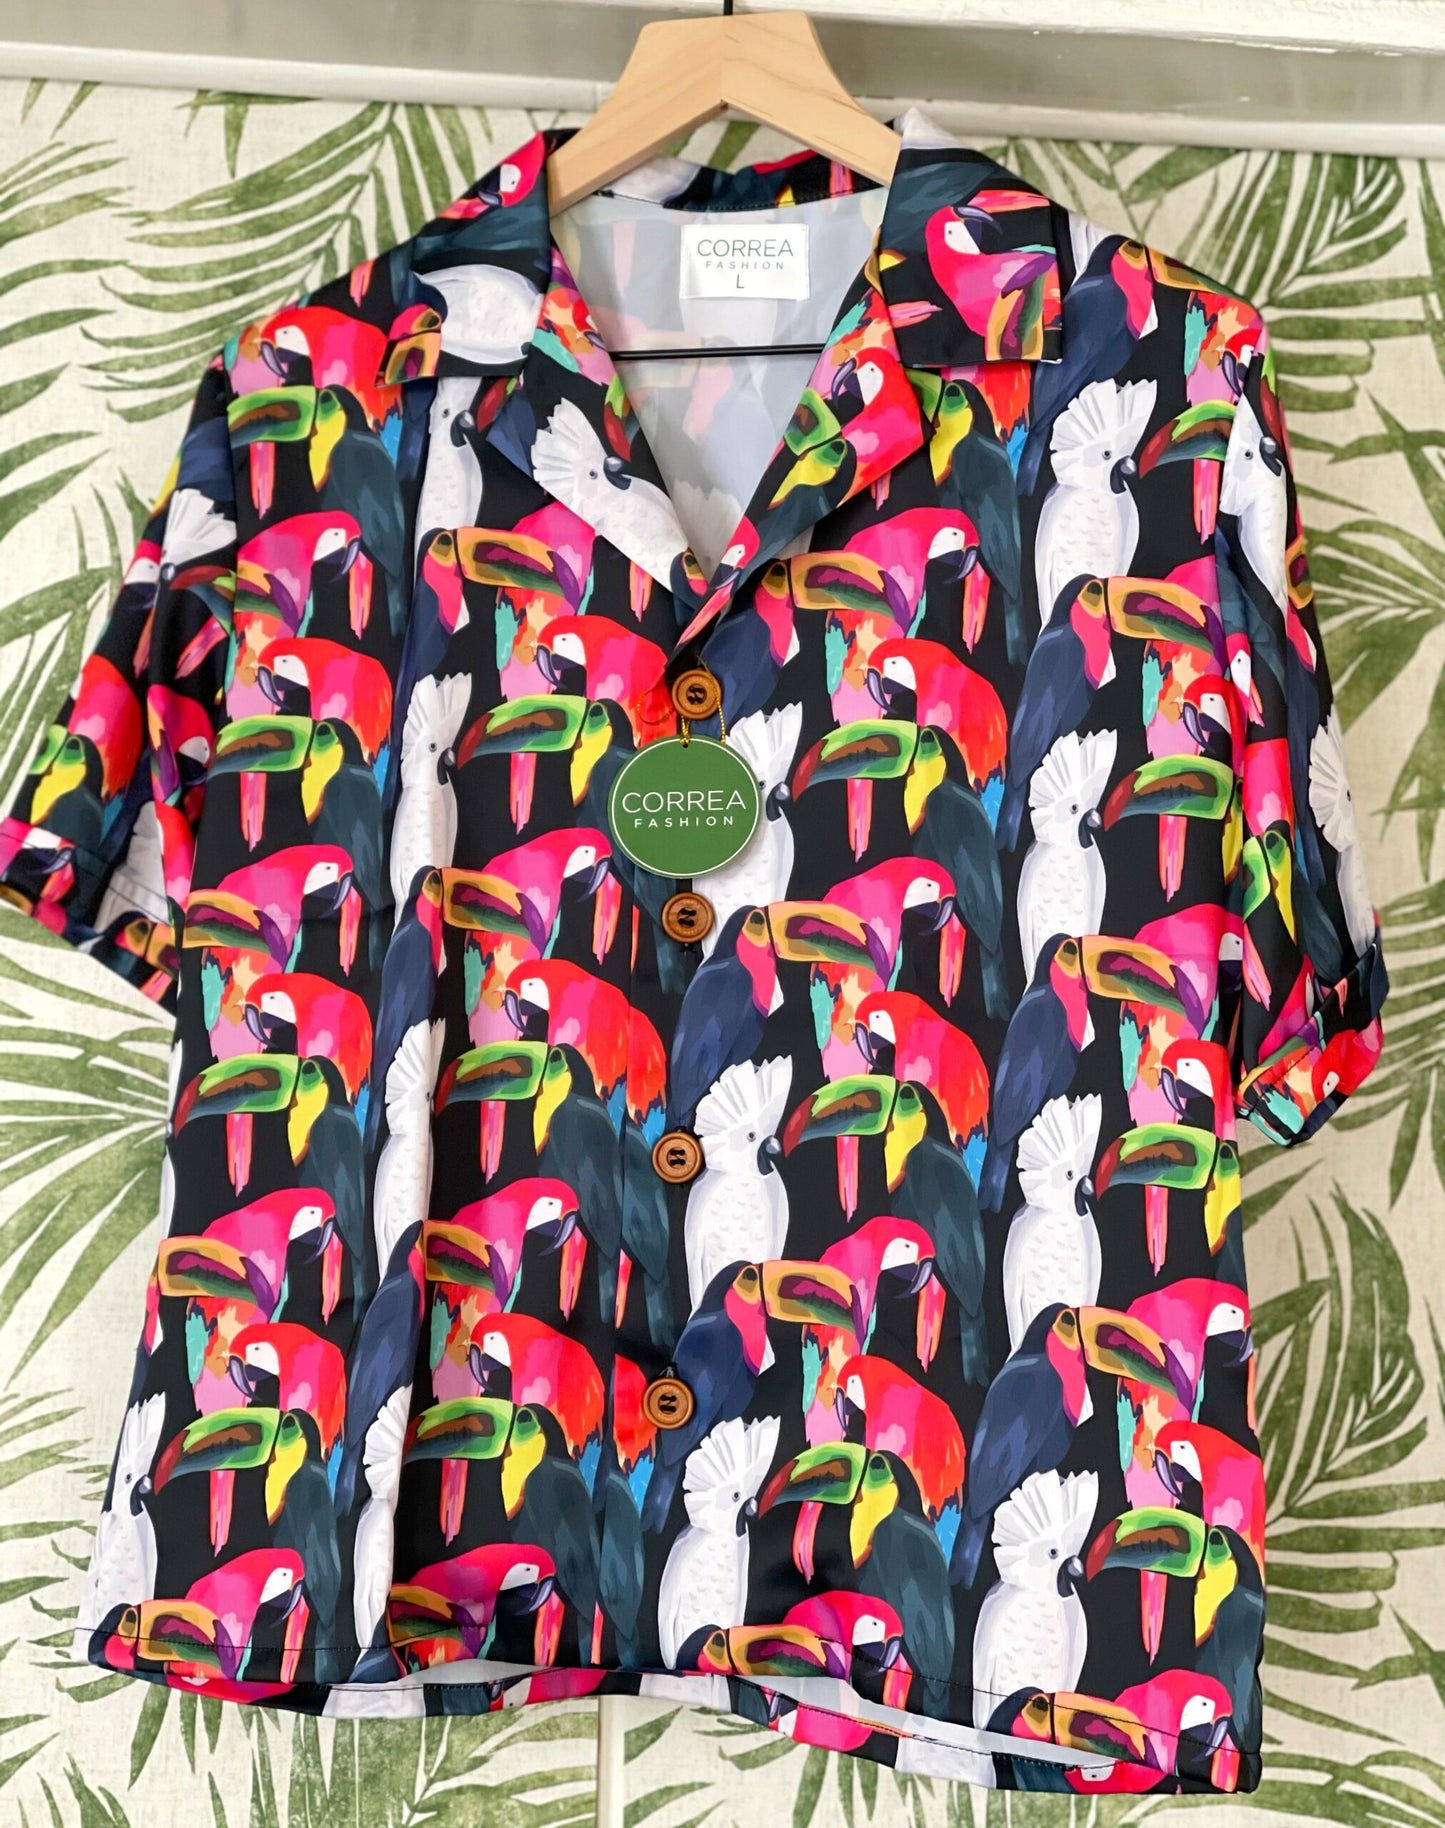 Pelicanos blouse